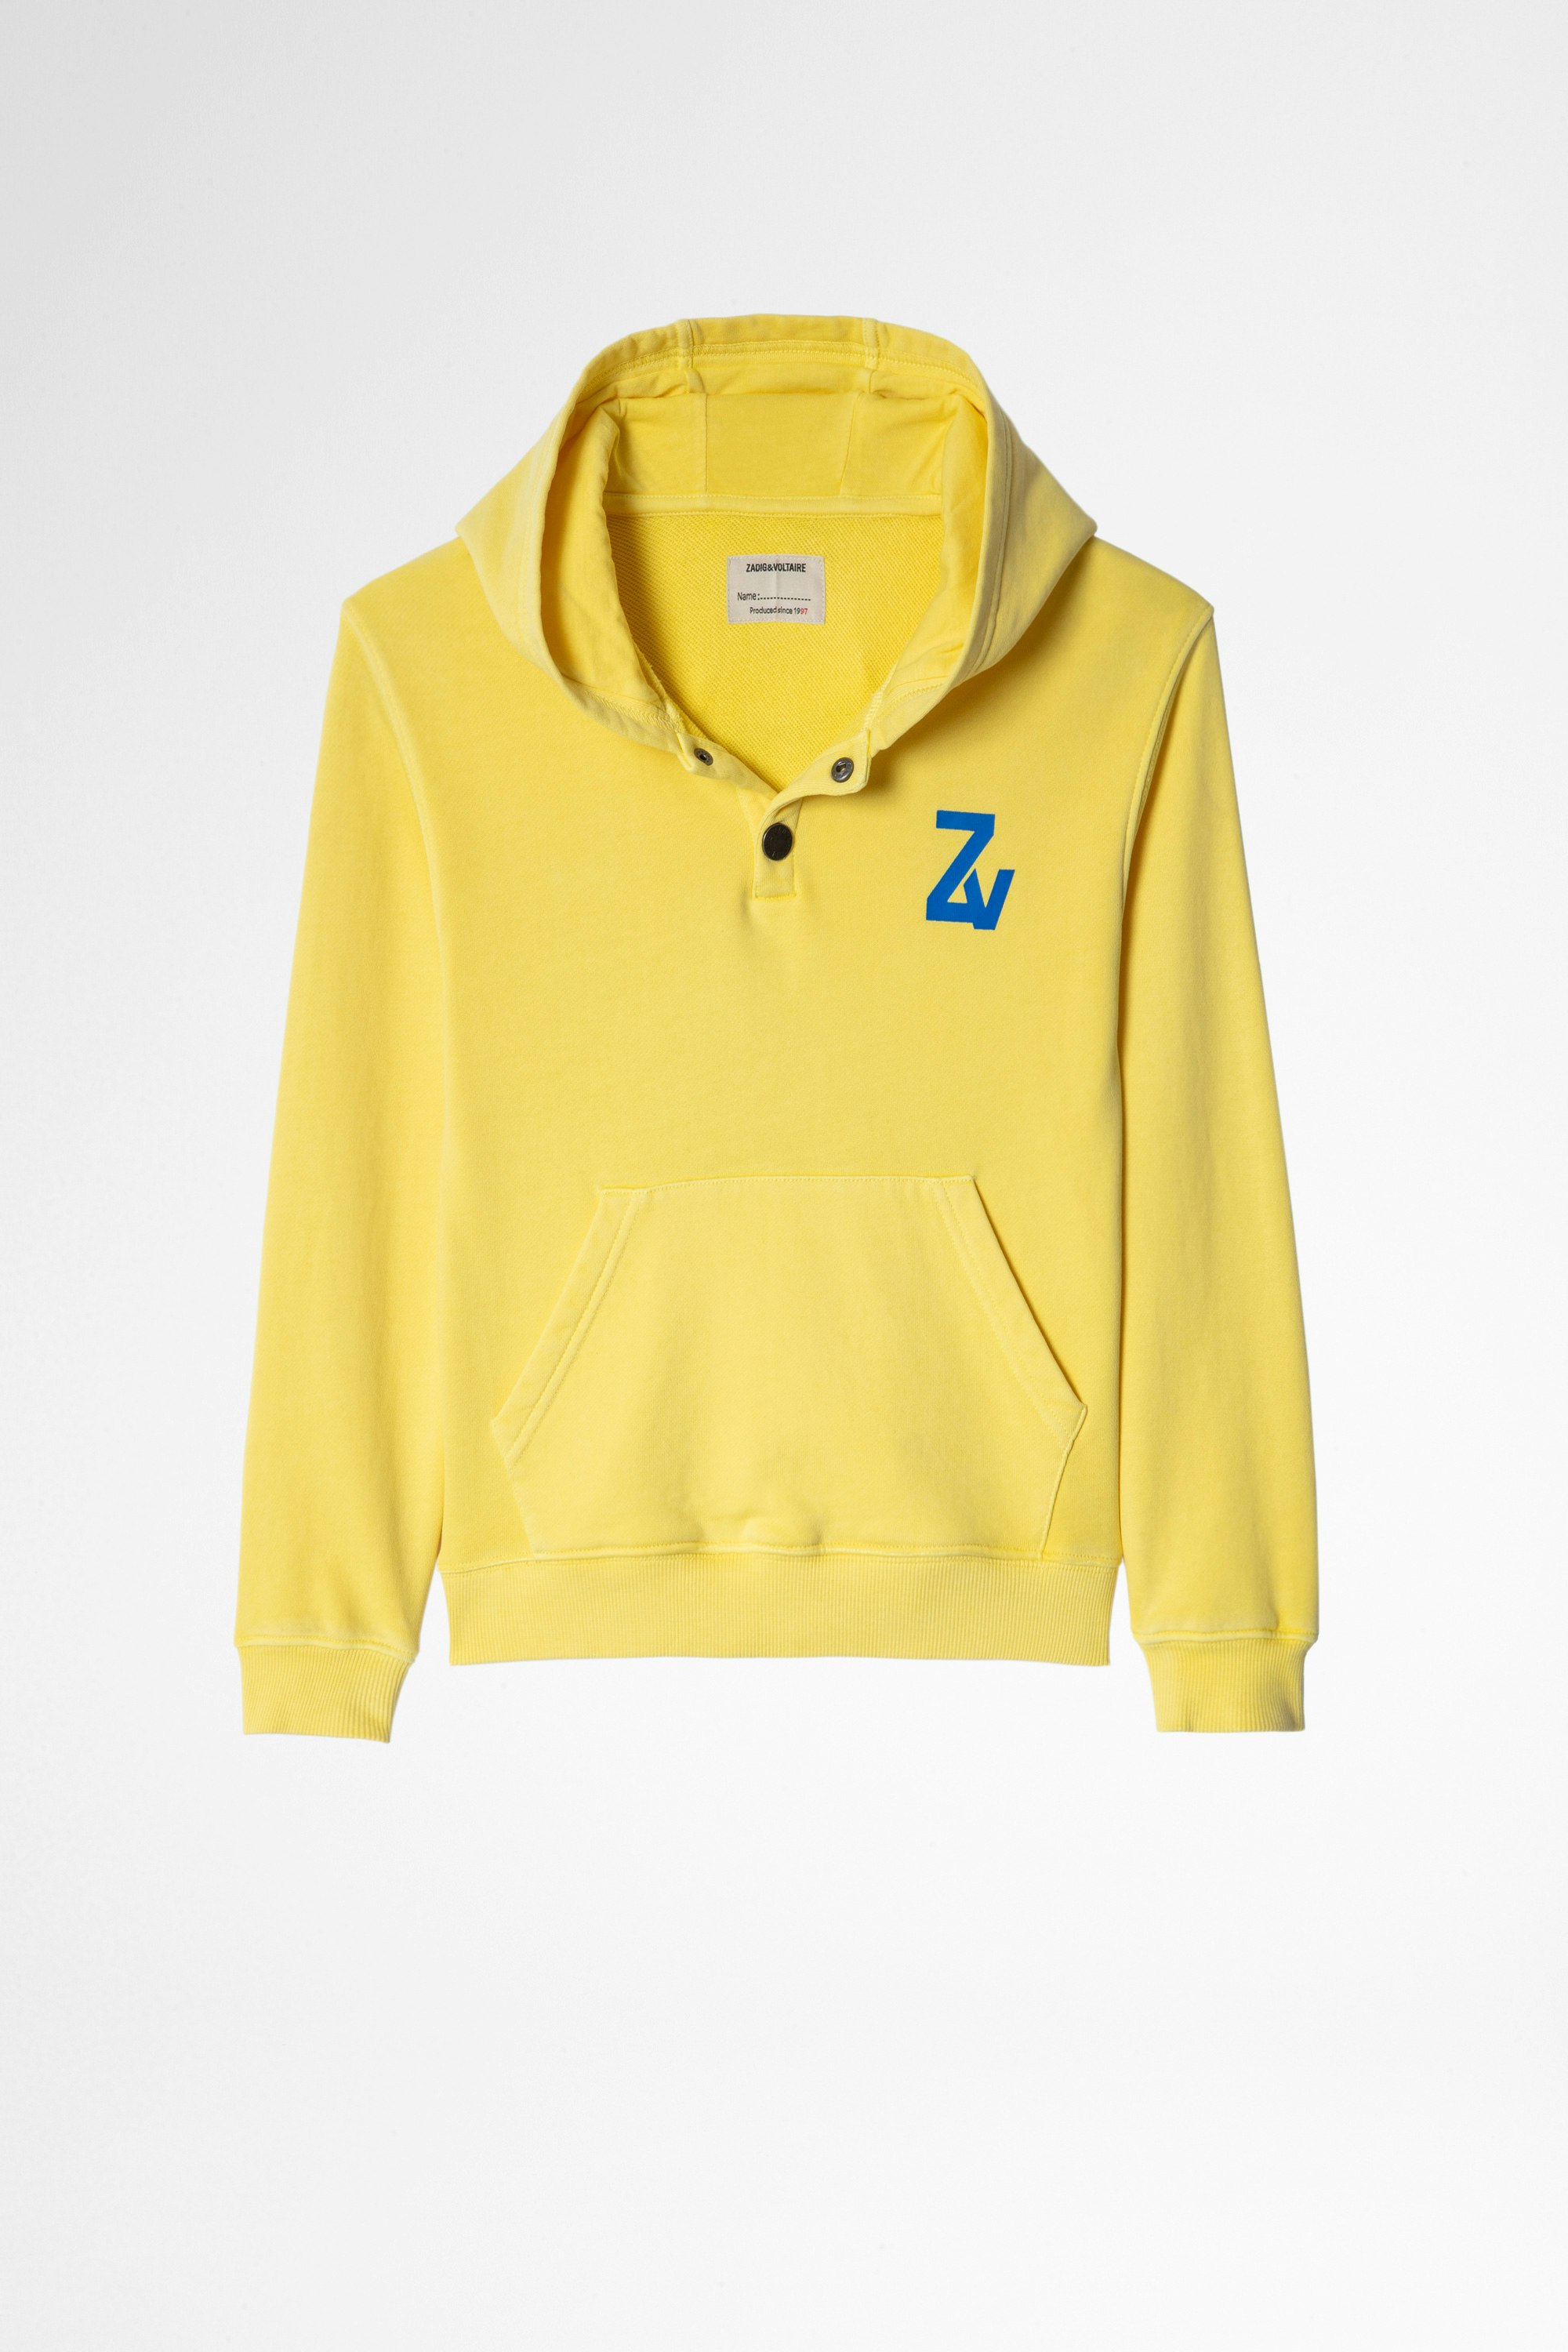 Alvin Children's スウェット Children's cotton hooded sweatshirt in yellow